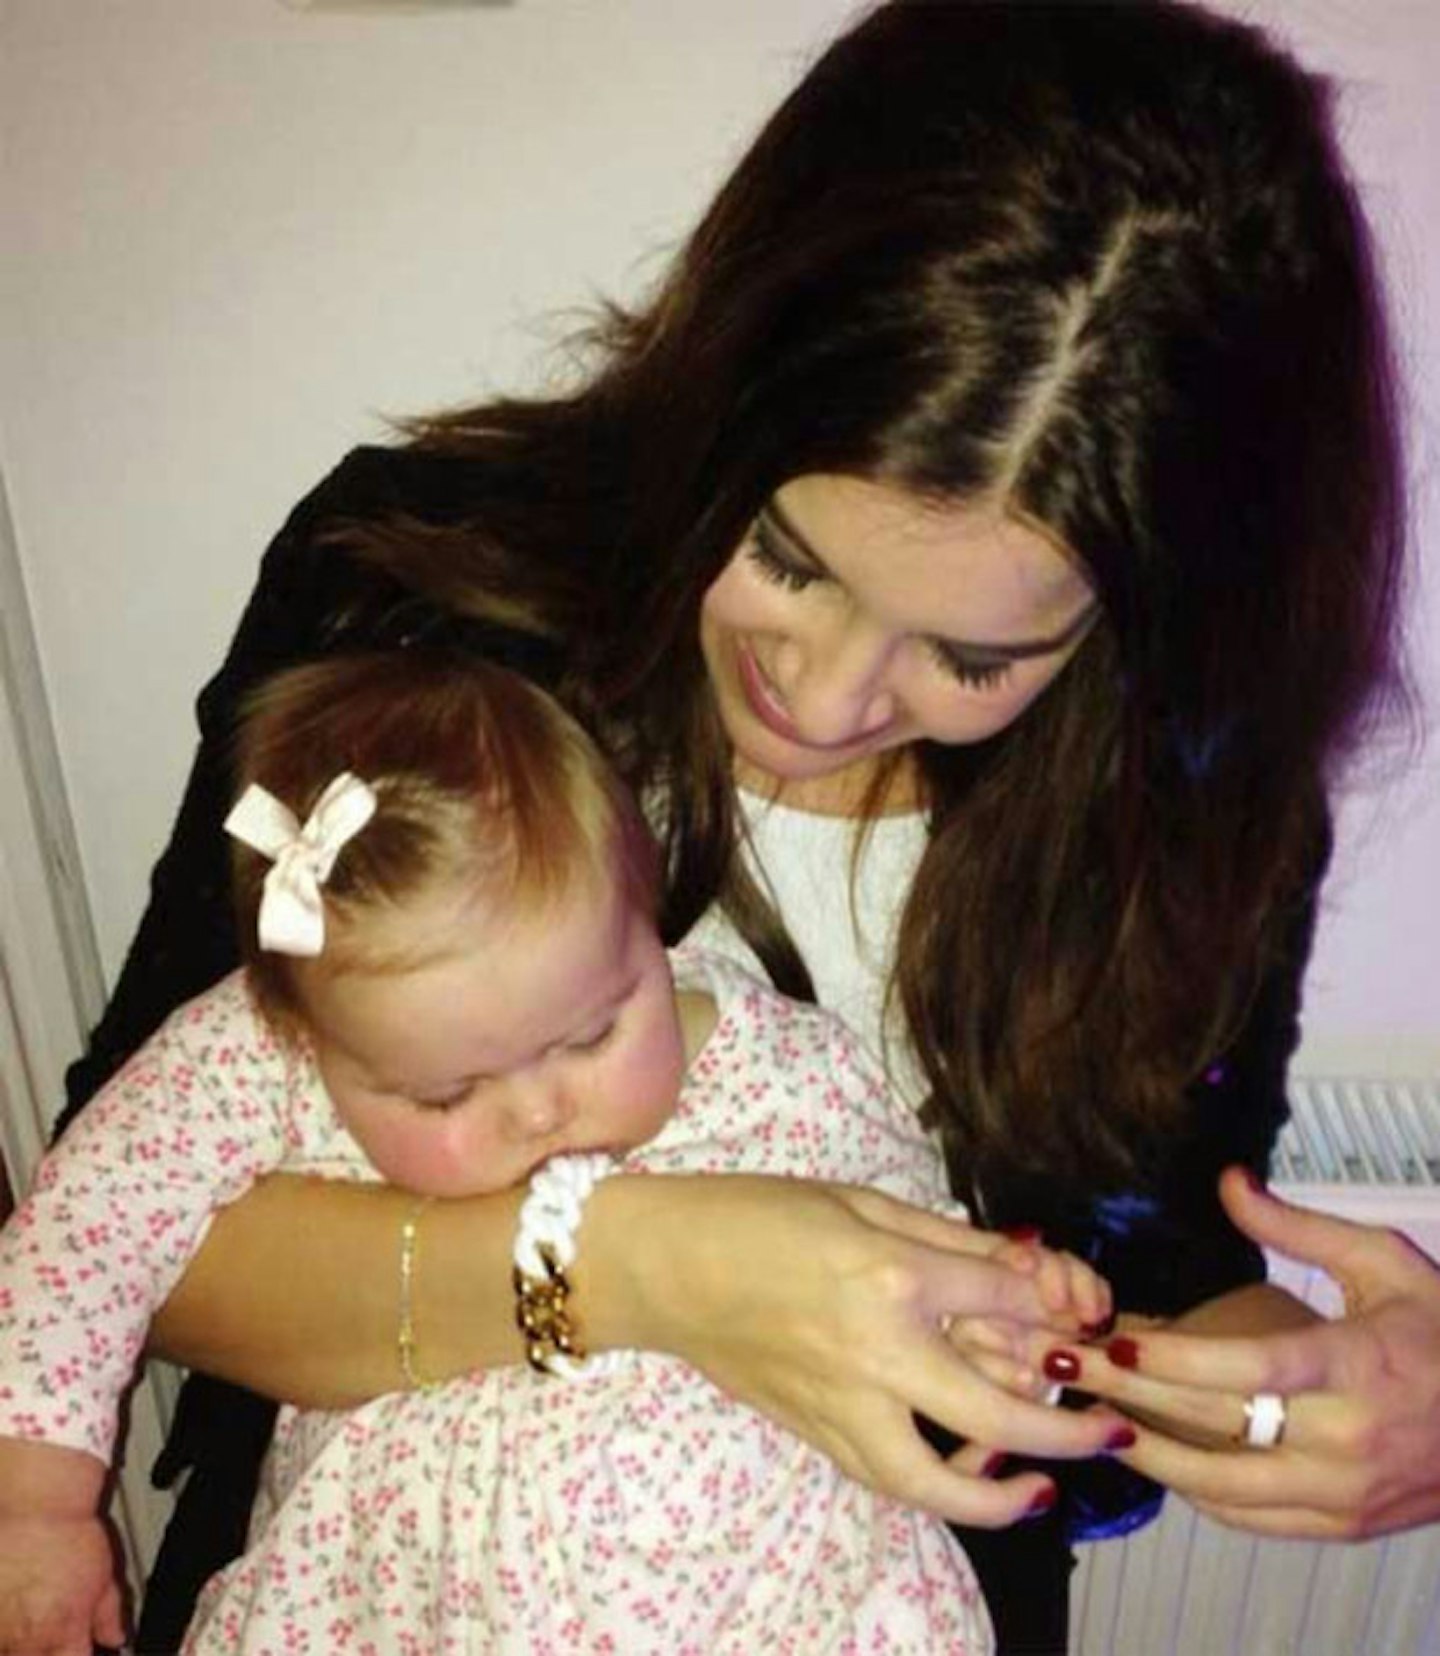 February 2013: Imogen Thomas welcomed daughter Ariana